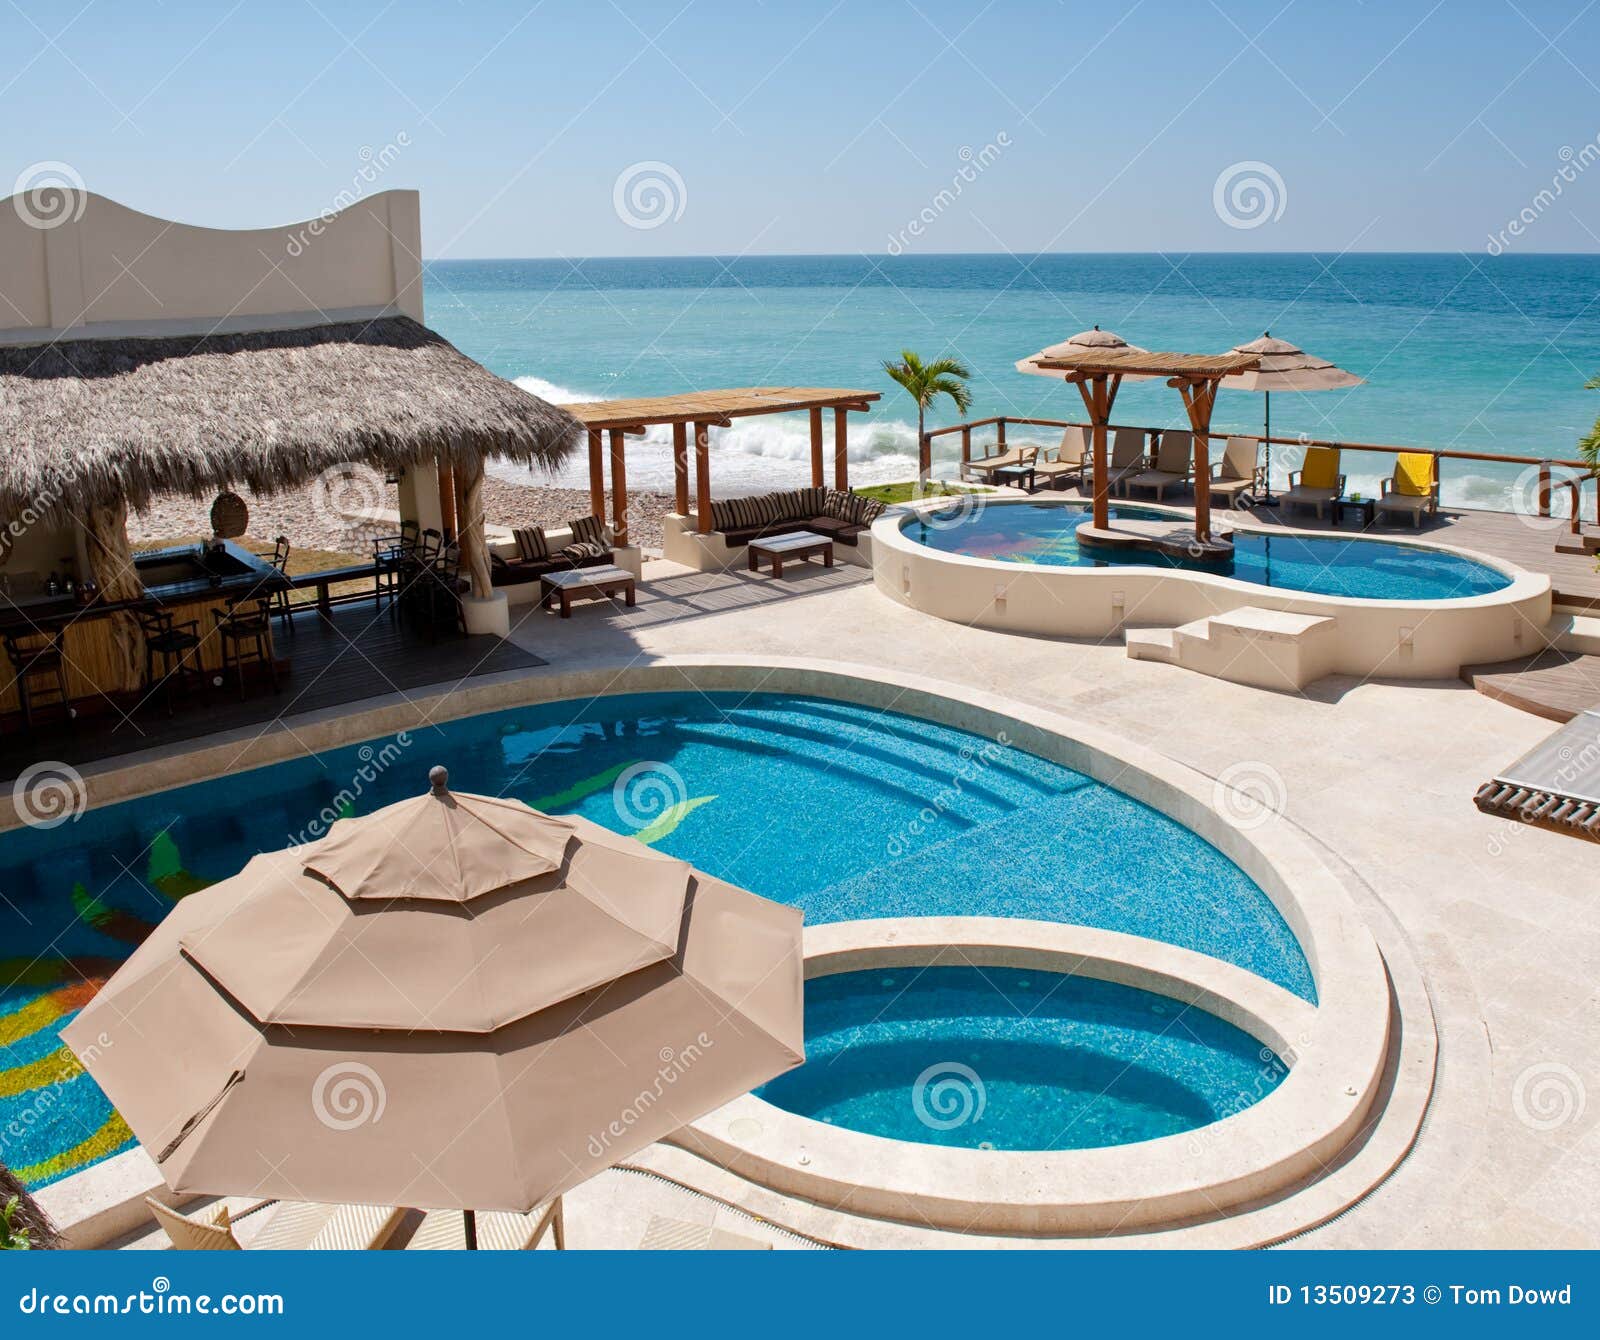 seaside resort swimming pools